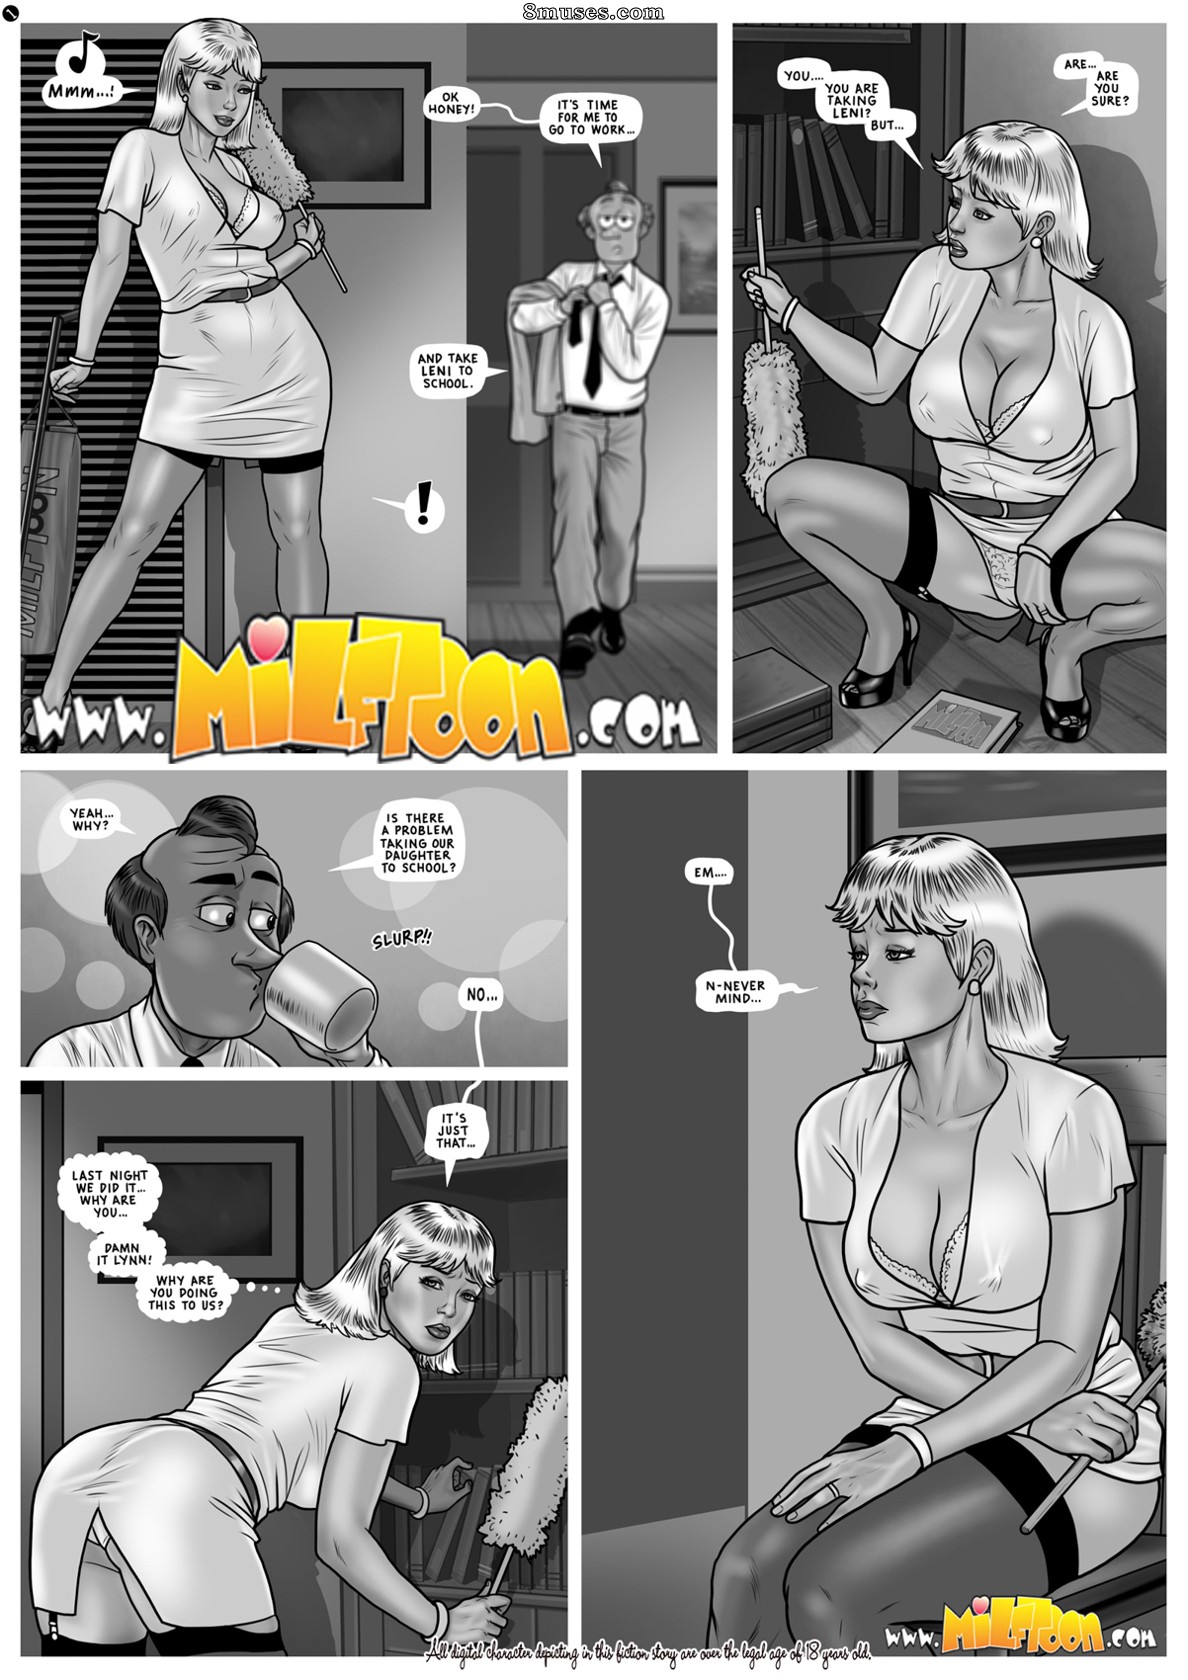 comic strip toon porn hot photo